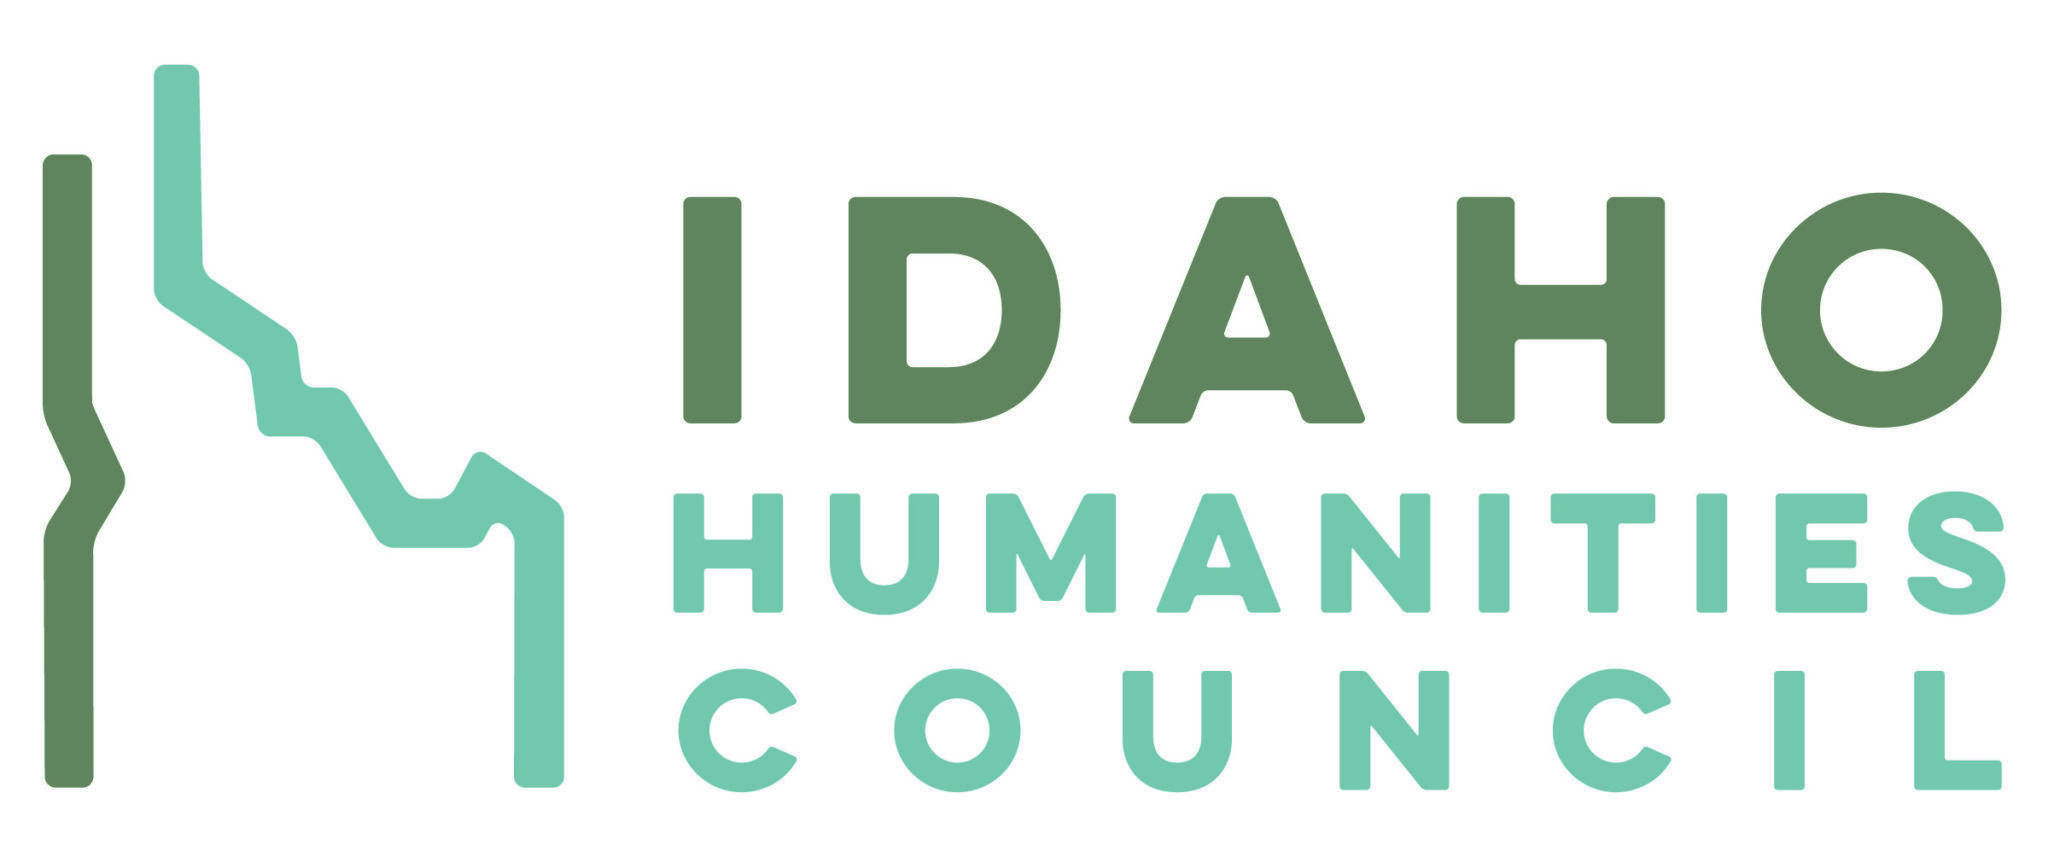 IHC Logo - IHC Logos - Idaho Humanities Council